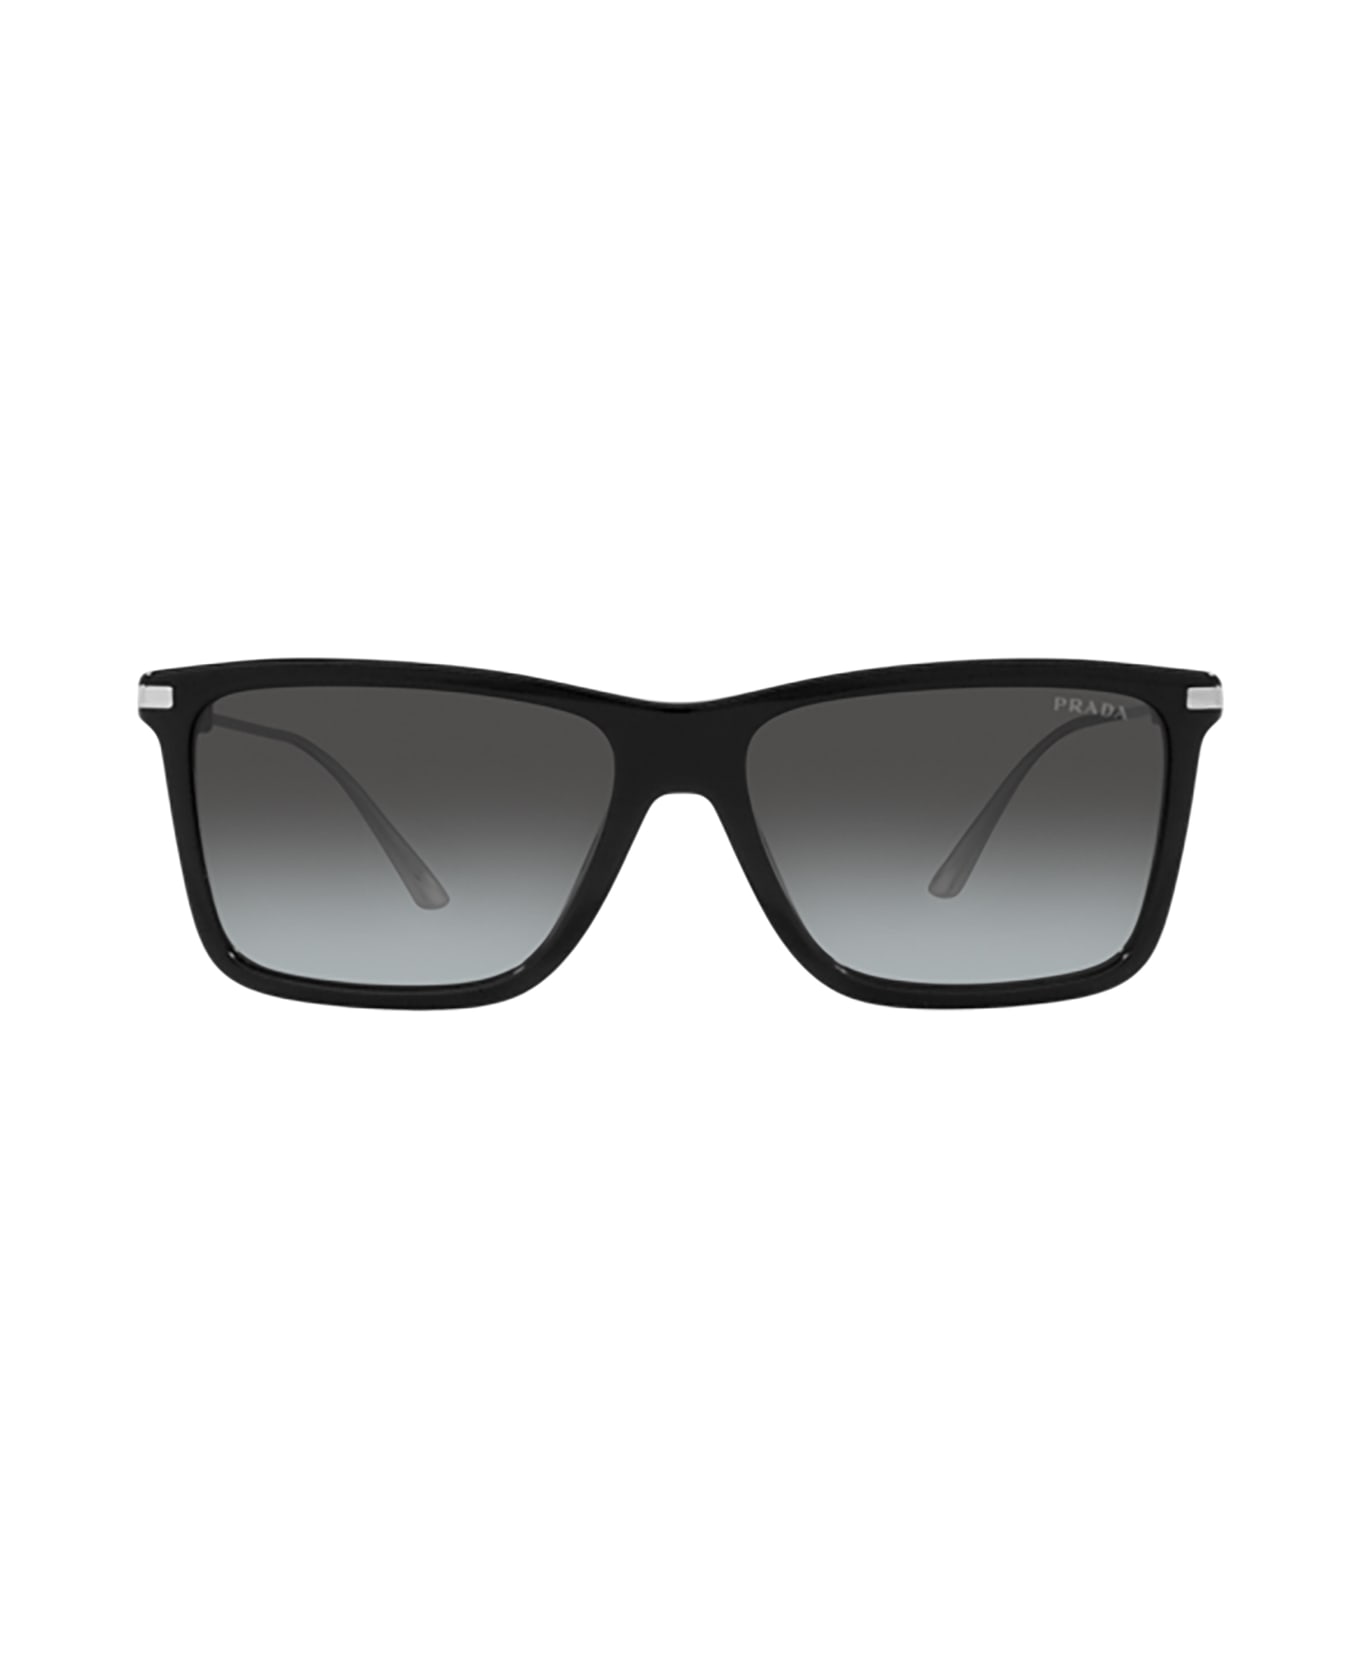 Prada Eyewear Pr 01zs Black Sunglasses - Black